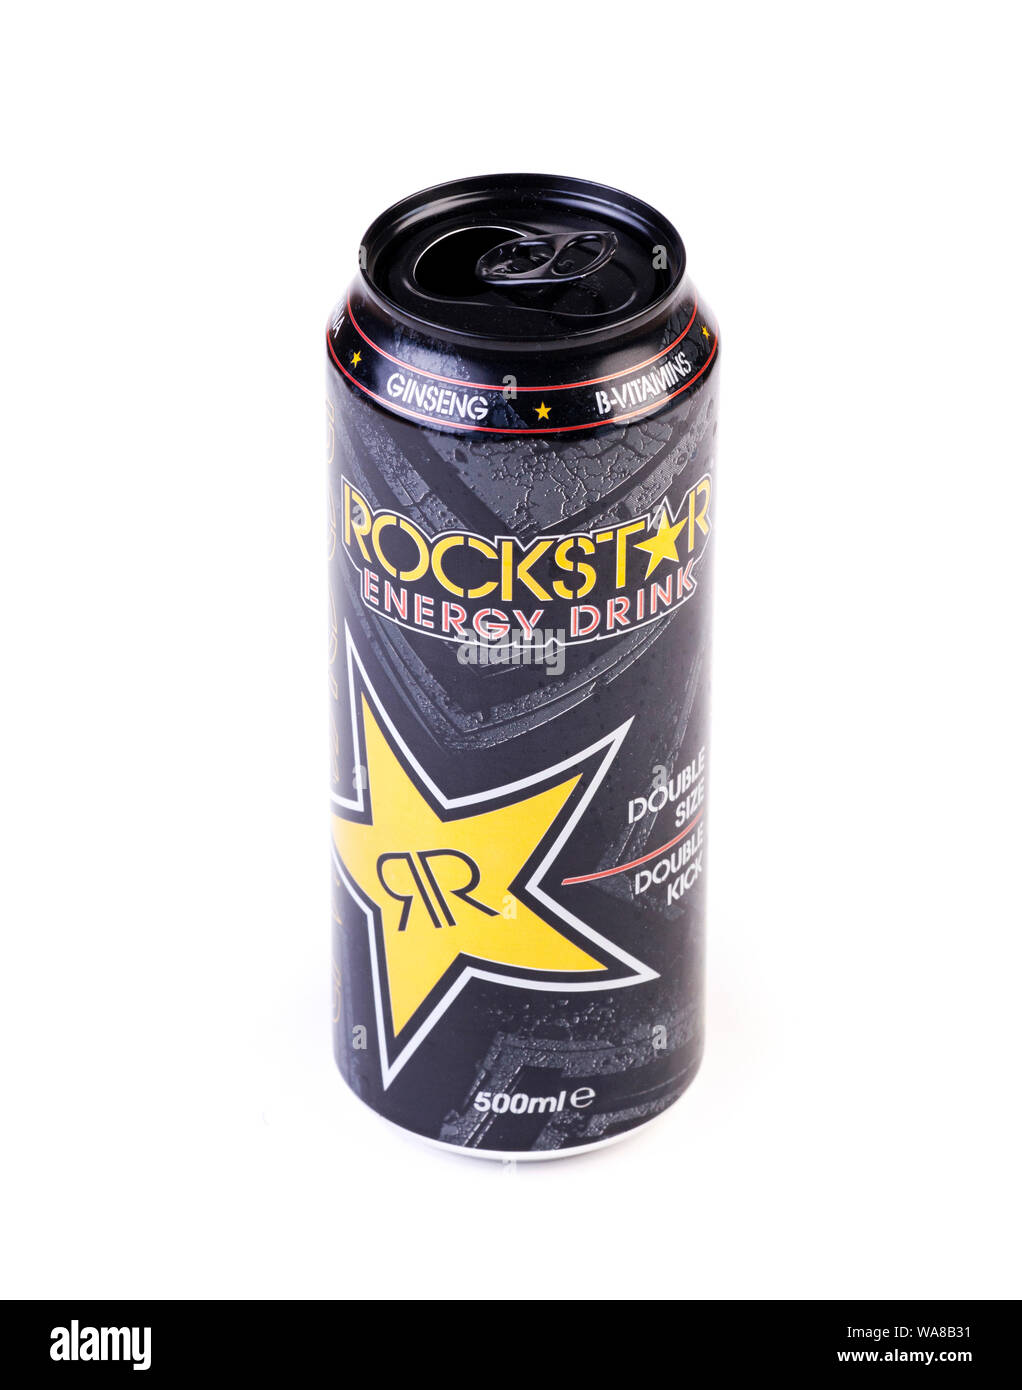 Rockstar energy drink. Stockfoto